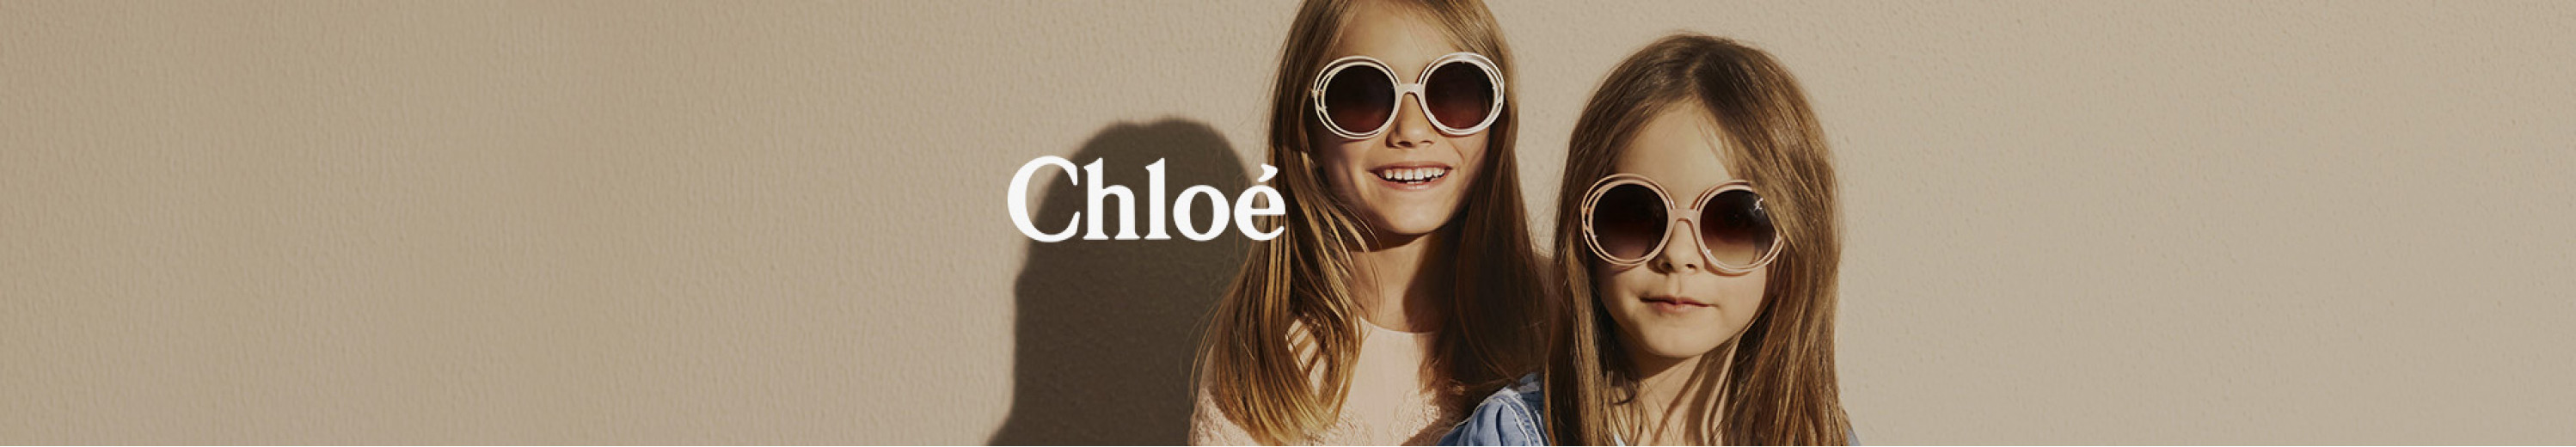 Chloé Sunglasses for Kids